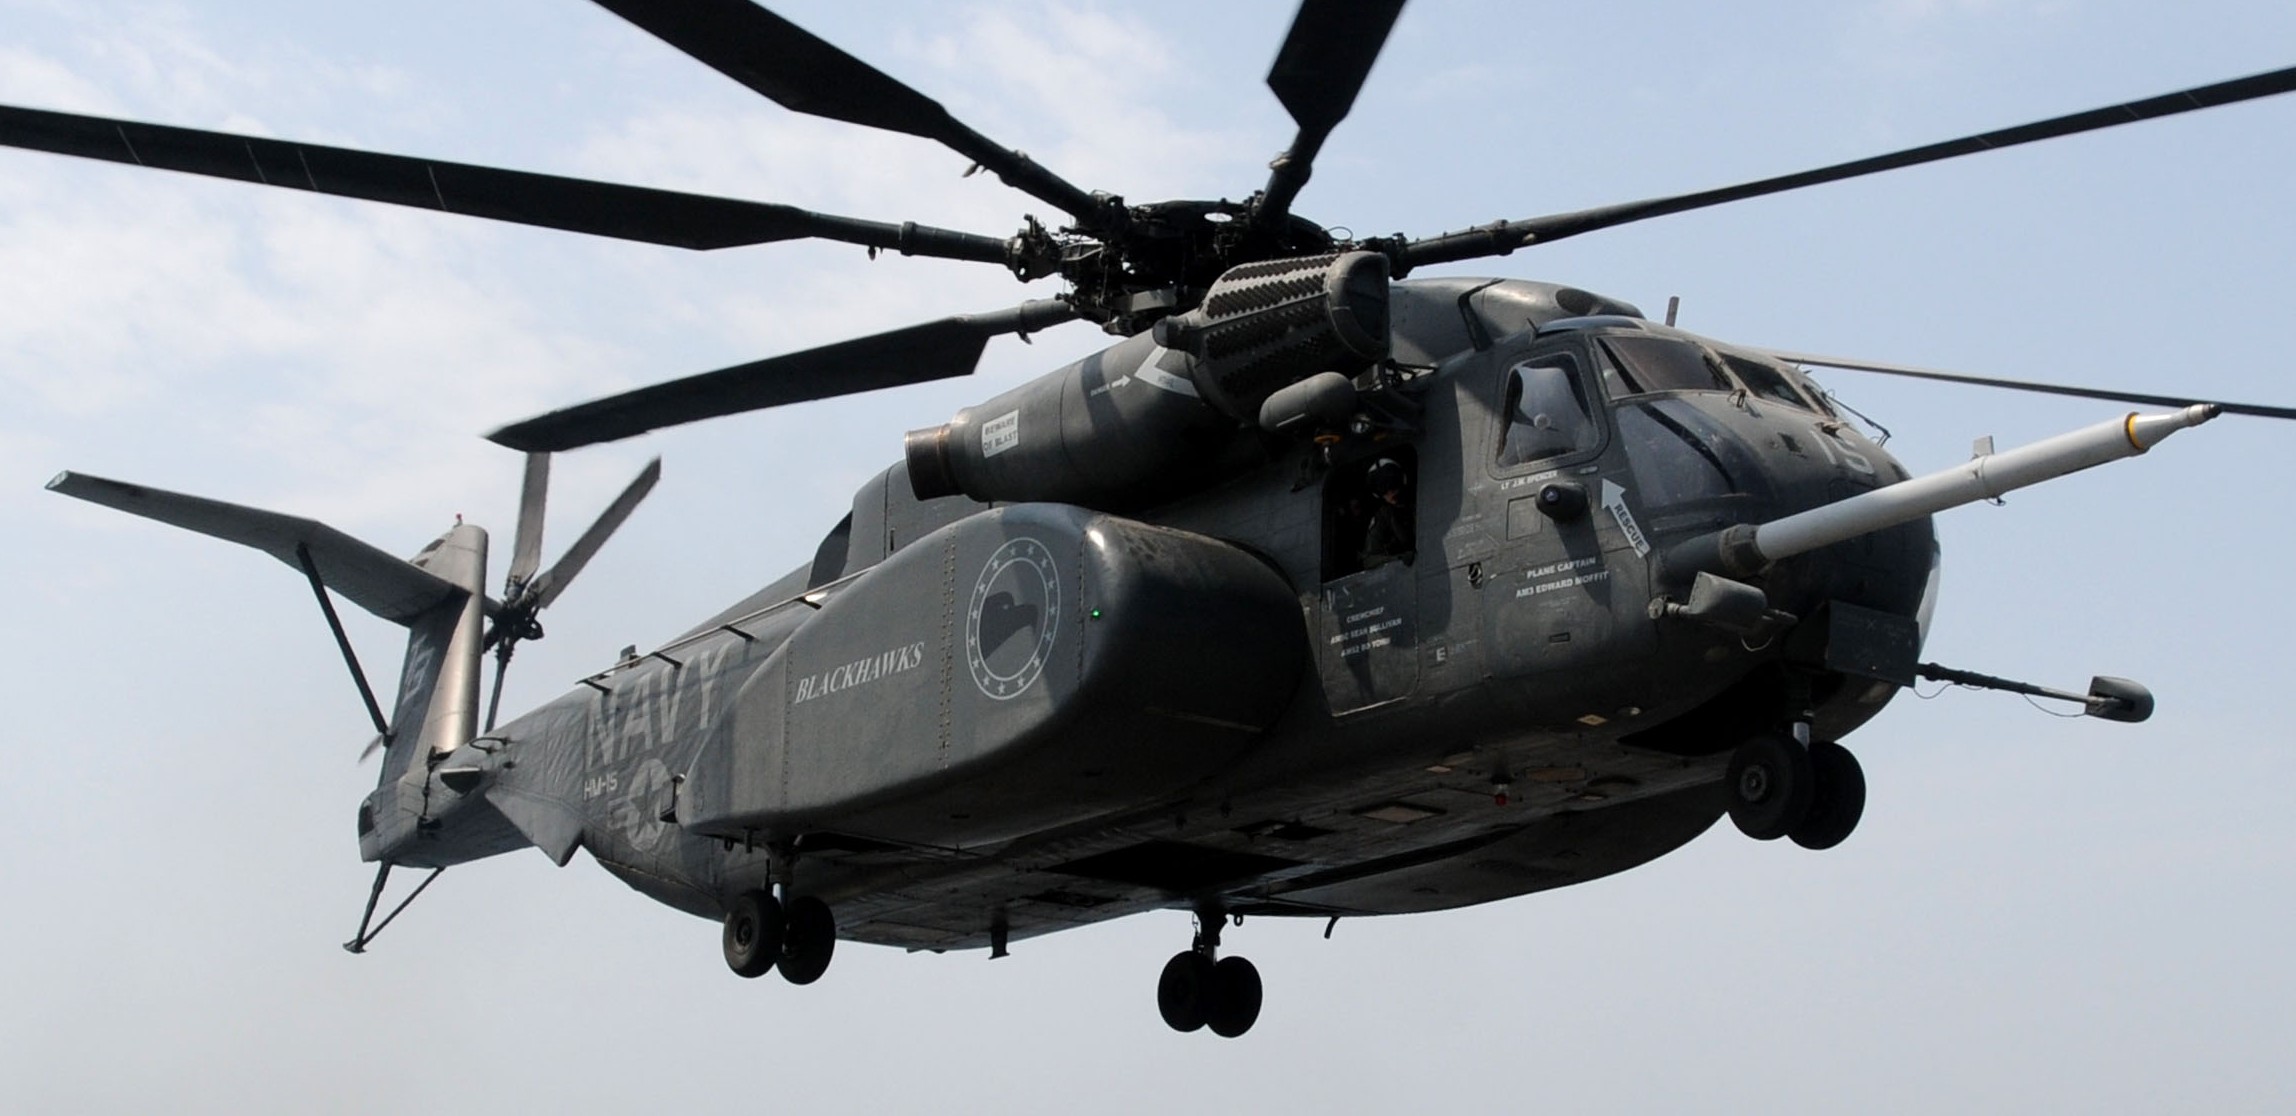 hm-15 blackhawks helicopter mine countermeasures squadron navy mh-53e sea dragon 47